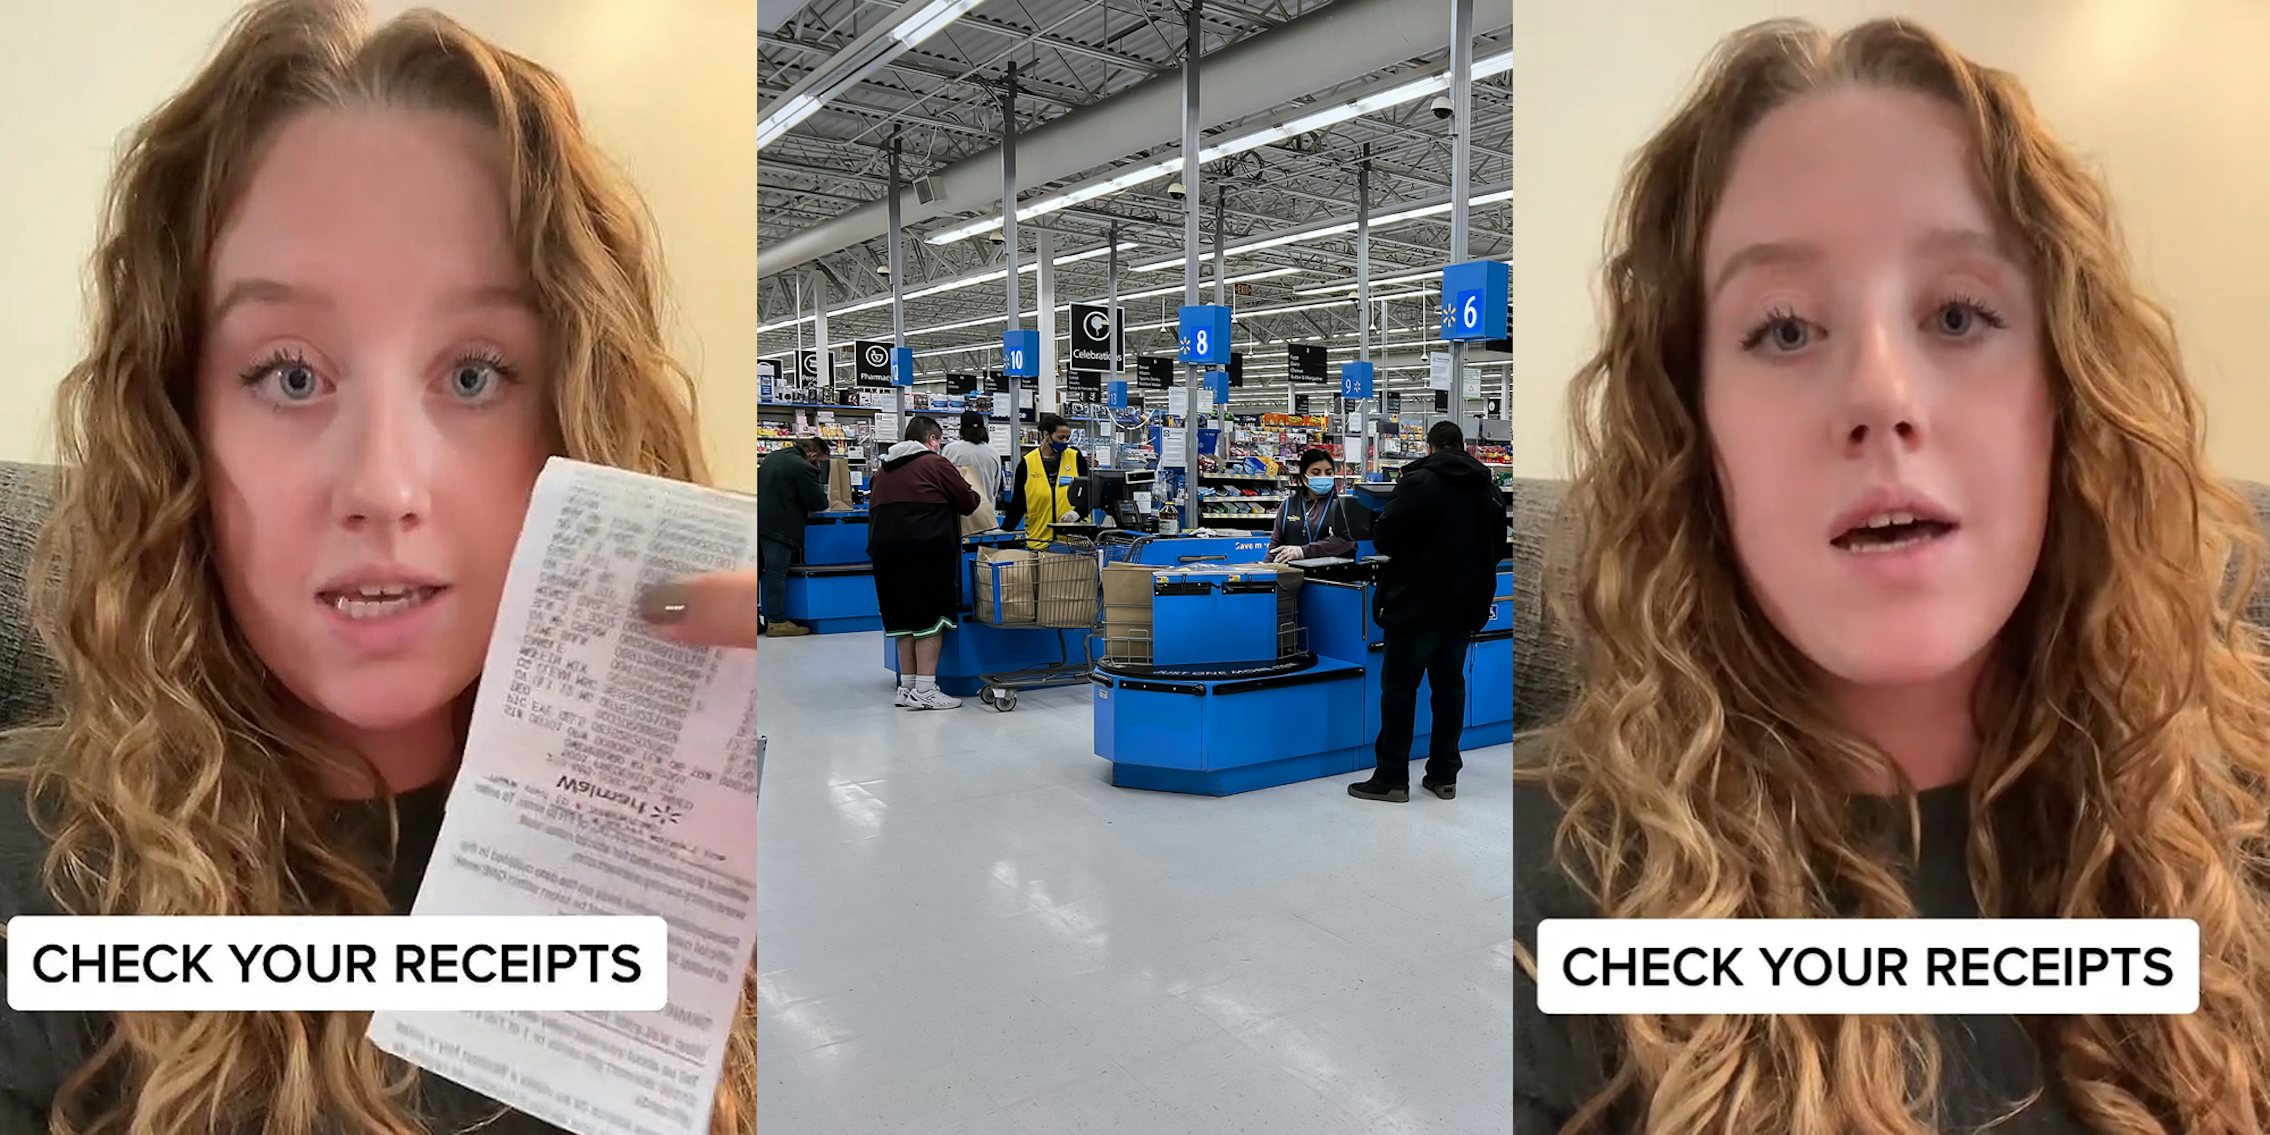 woman speaking holding receipt caption 'CHECK YOUR RECEIPTS' (L) Walmart checkout aisles (c) woman speaking caption 'CHECK YOUR RECEIPTS' (r)